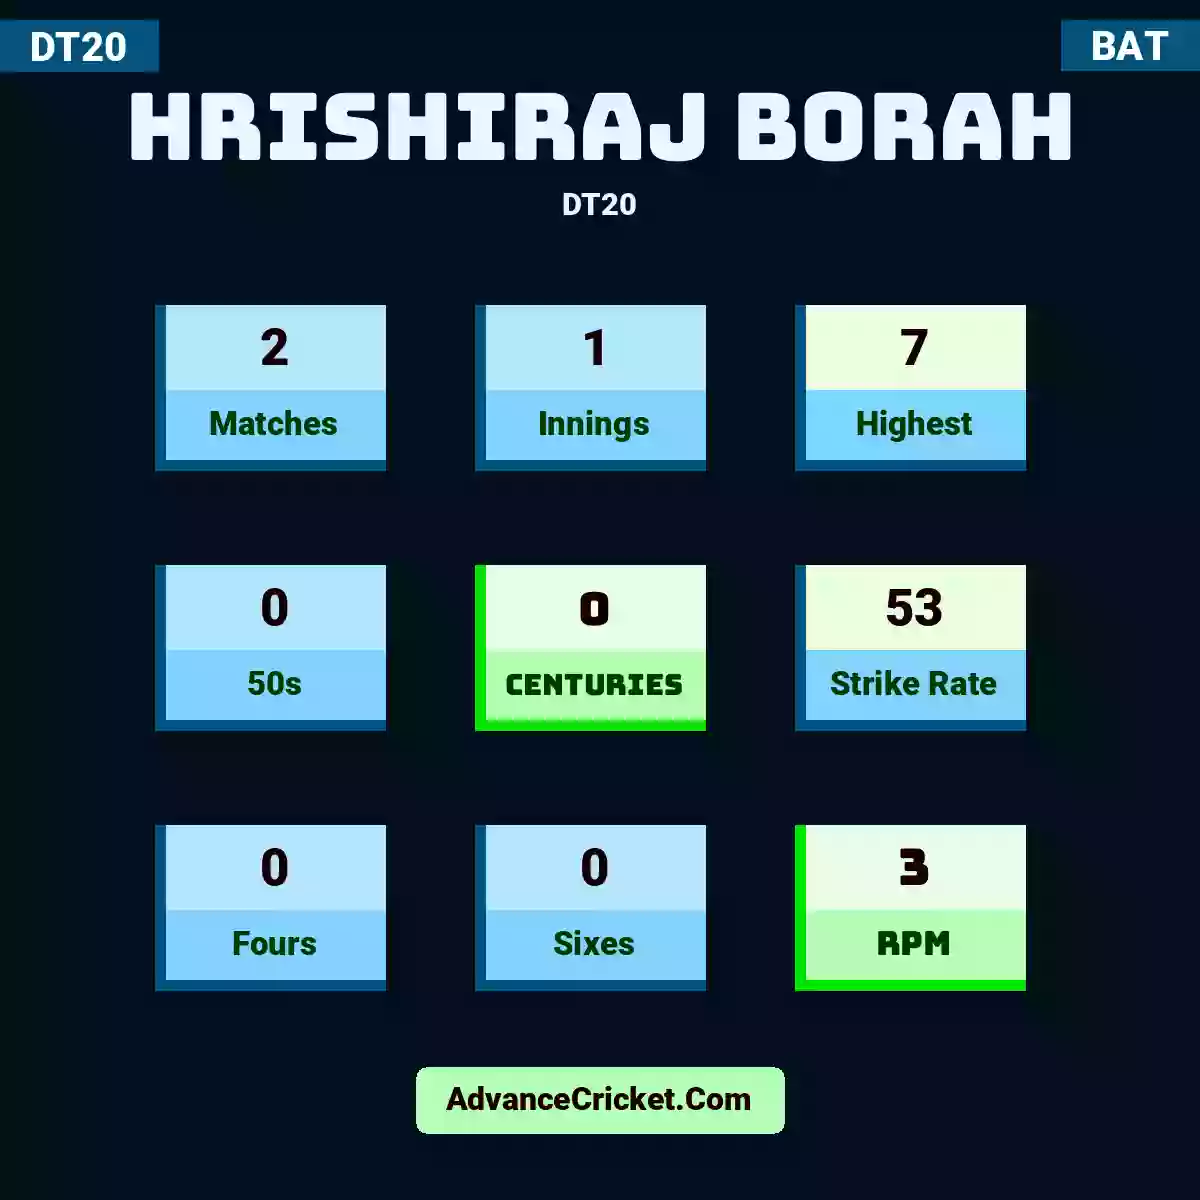 Hrishiraj Borah DT20 , Hrishiraj Borah played 2 matches, scored 7 runs as highest, 0 half-centuries, and 0 centuries, with a strike rate of 53. H.Borah hit 0 fours and 0 sixes, with an RPM of 3.